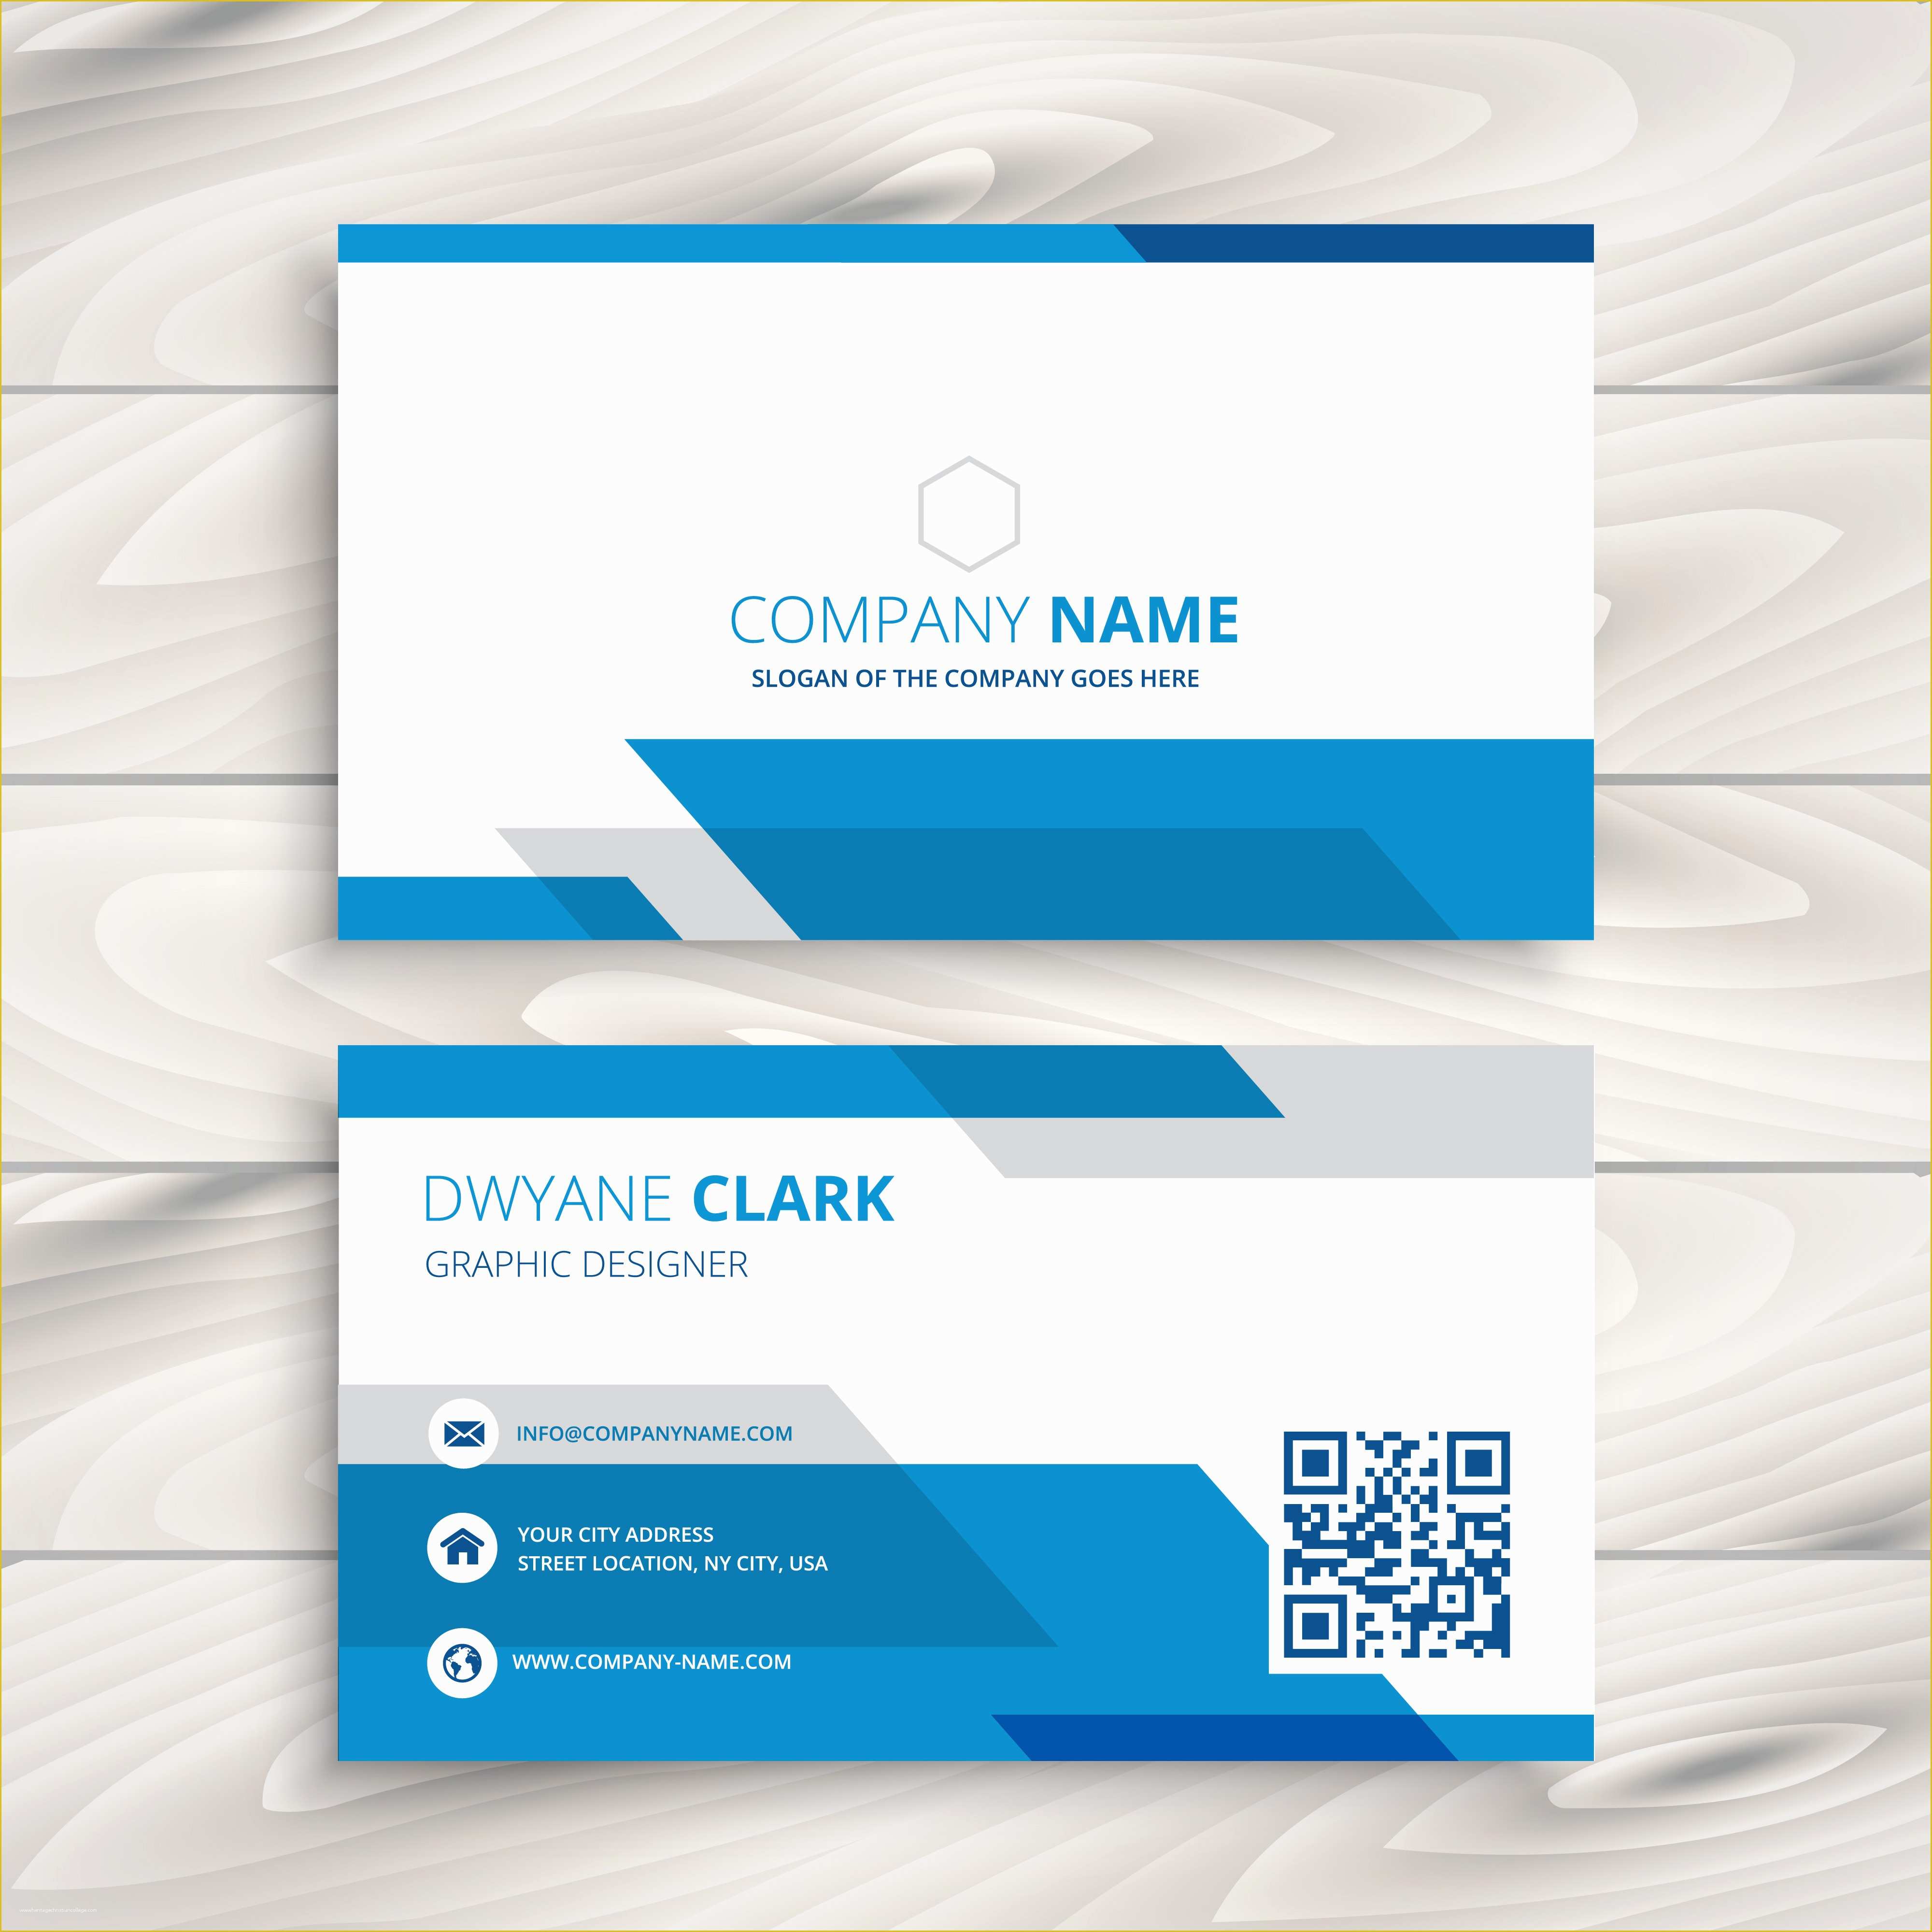 Corporate Business Card Templates Free Download Of Blue Corporate Business Card Template Vector Design